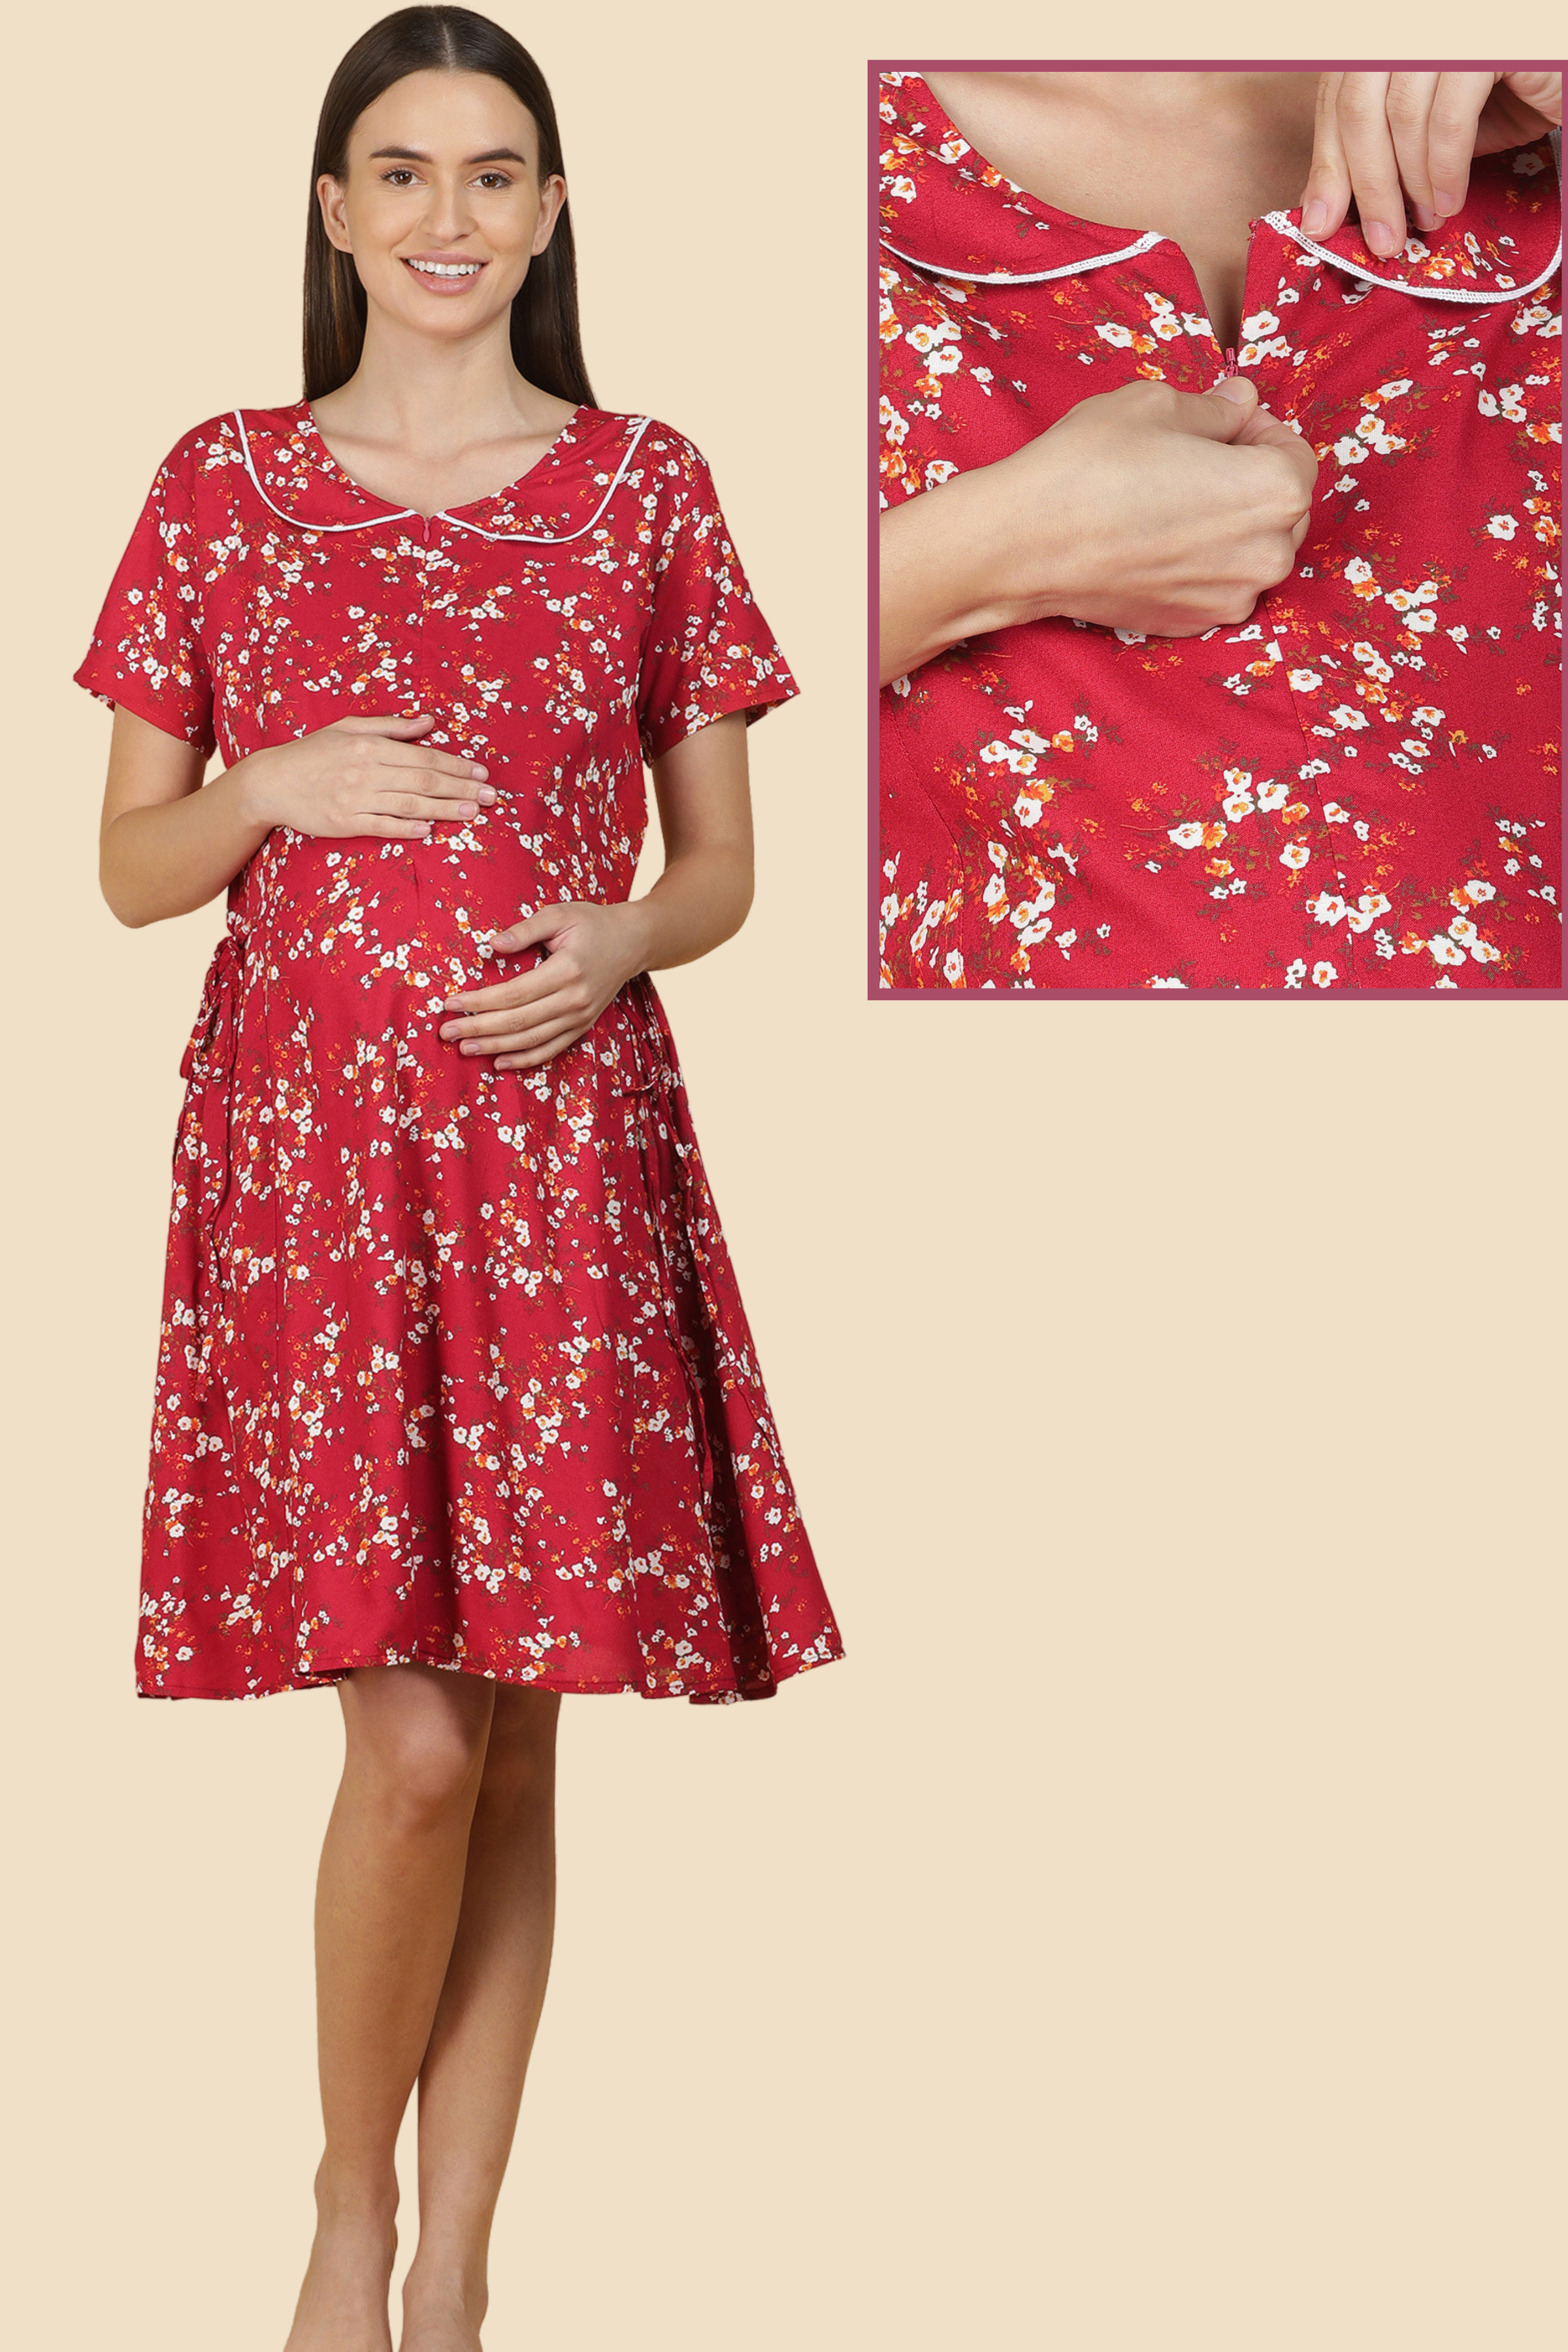 Cotton Feeding Dress, Indian maternity dress, Concealed Zipper, Nursing  Kurtis | eBay